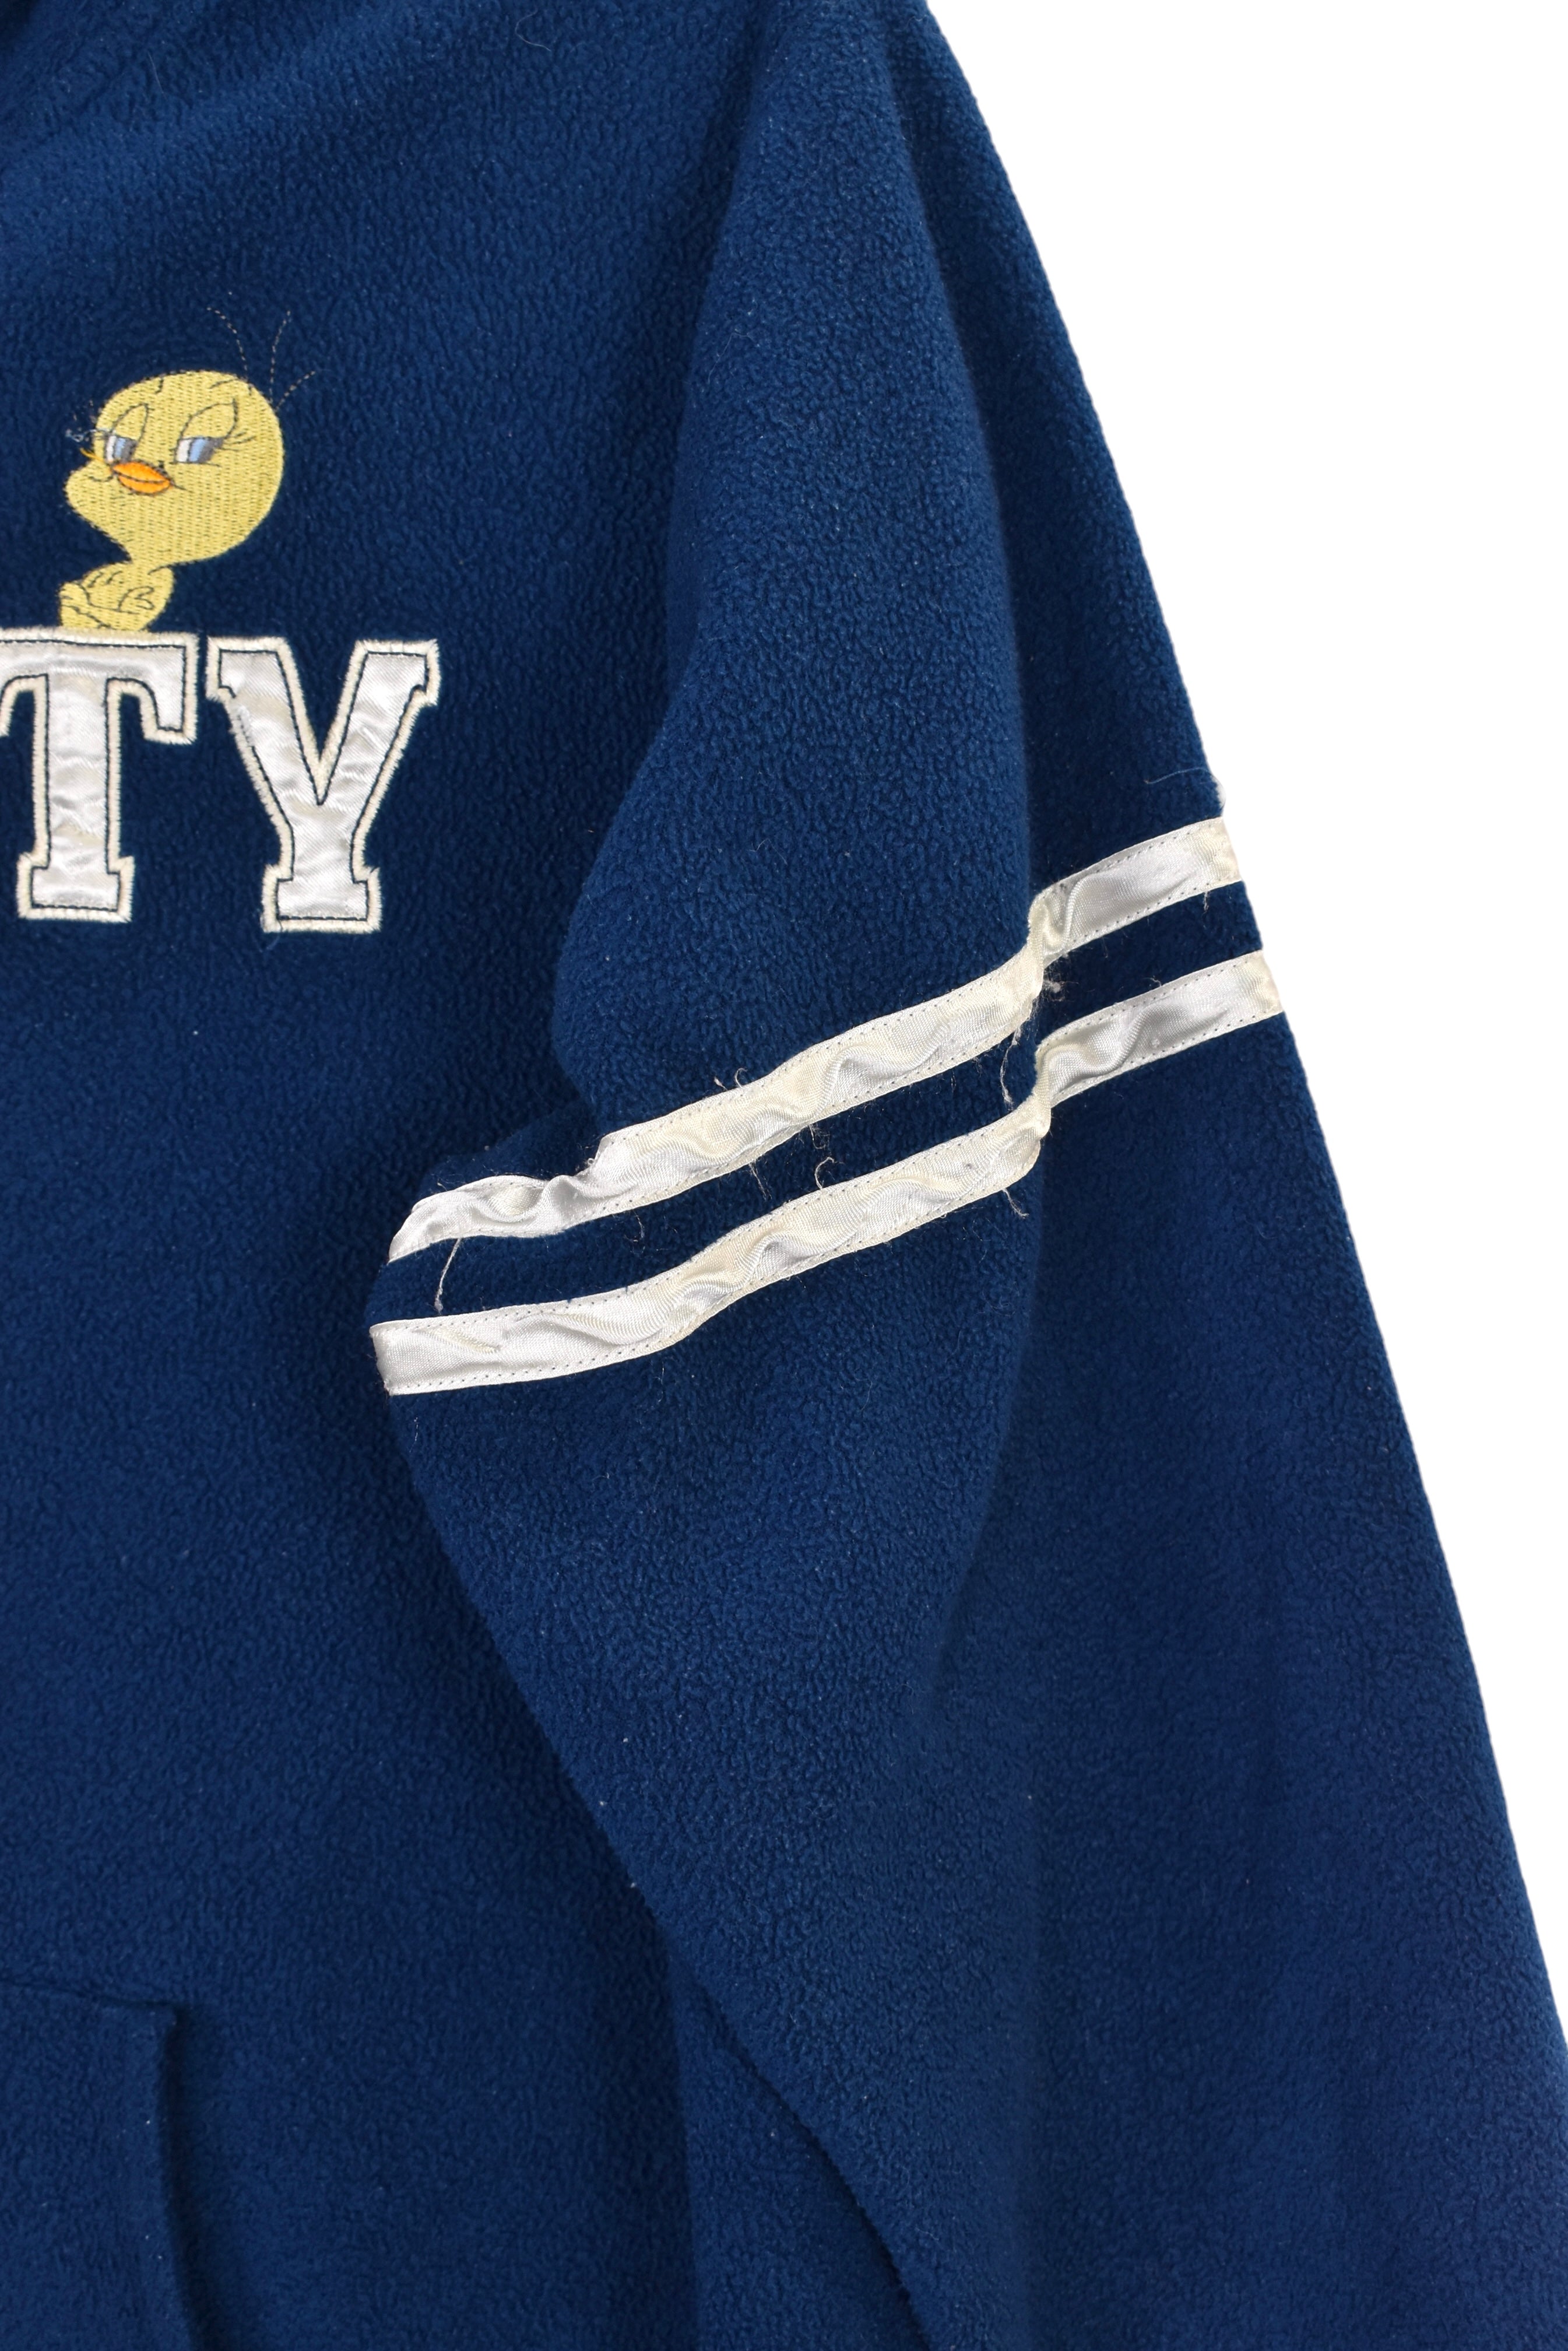 Women's vintage Tweety Bird hoodie (XL), navy embroidered fleece